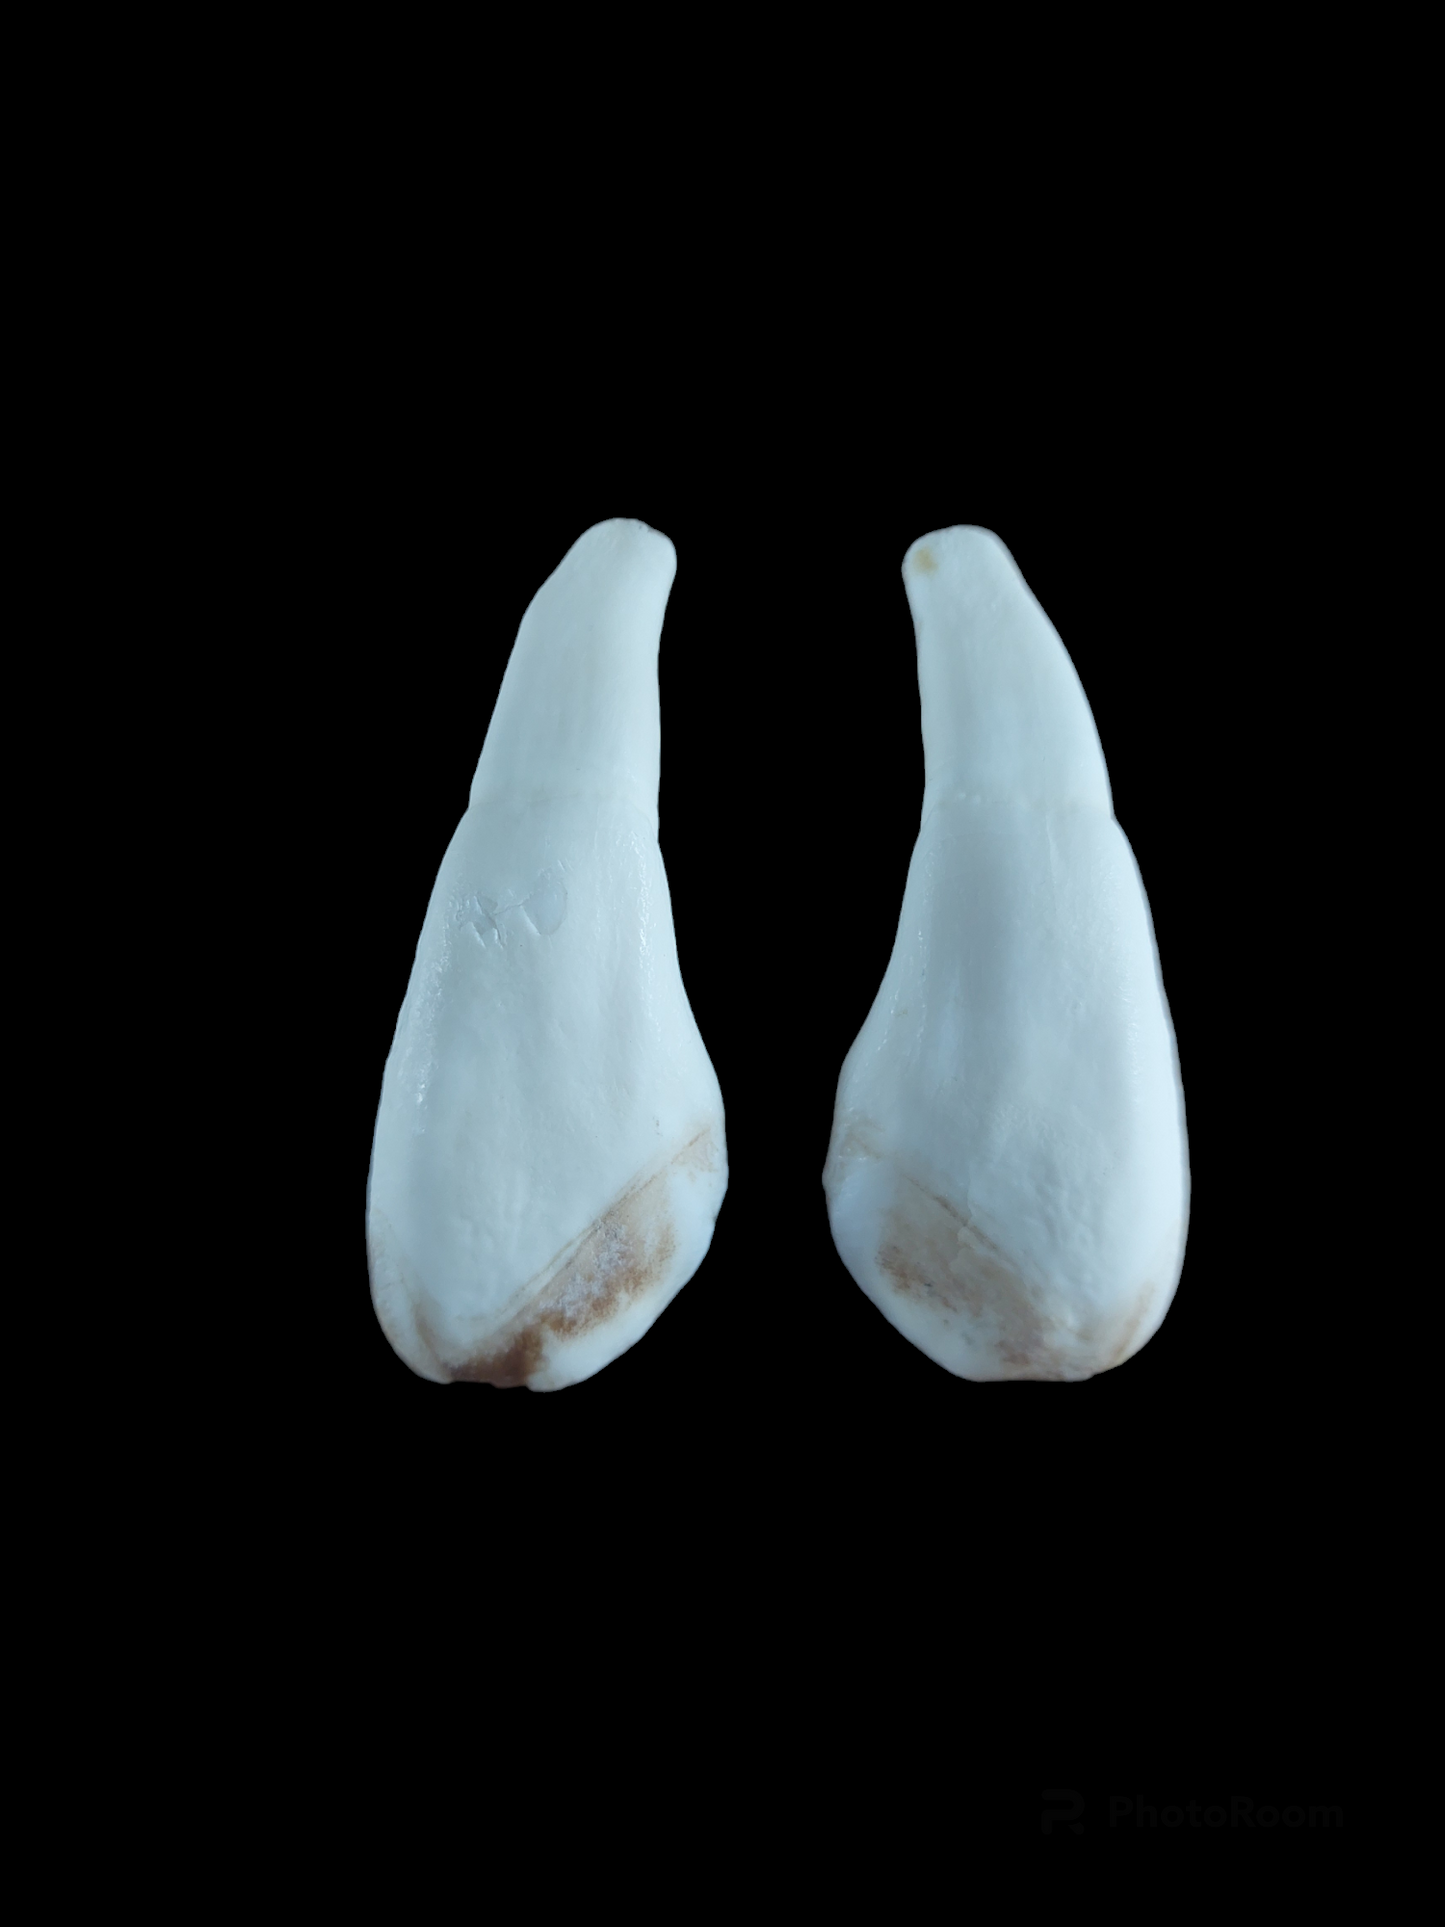 Cow incisor teeth, set of two